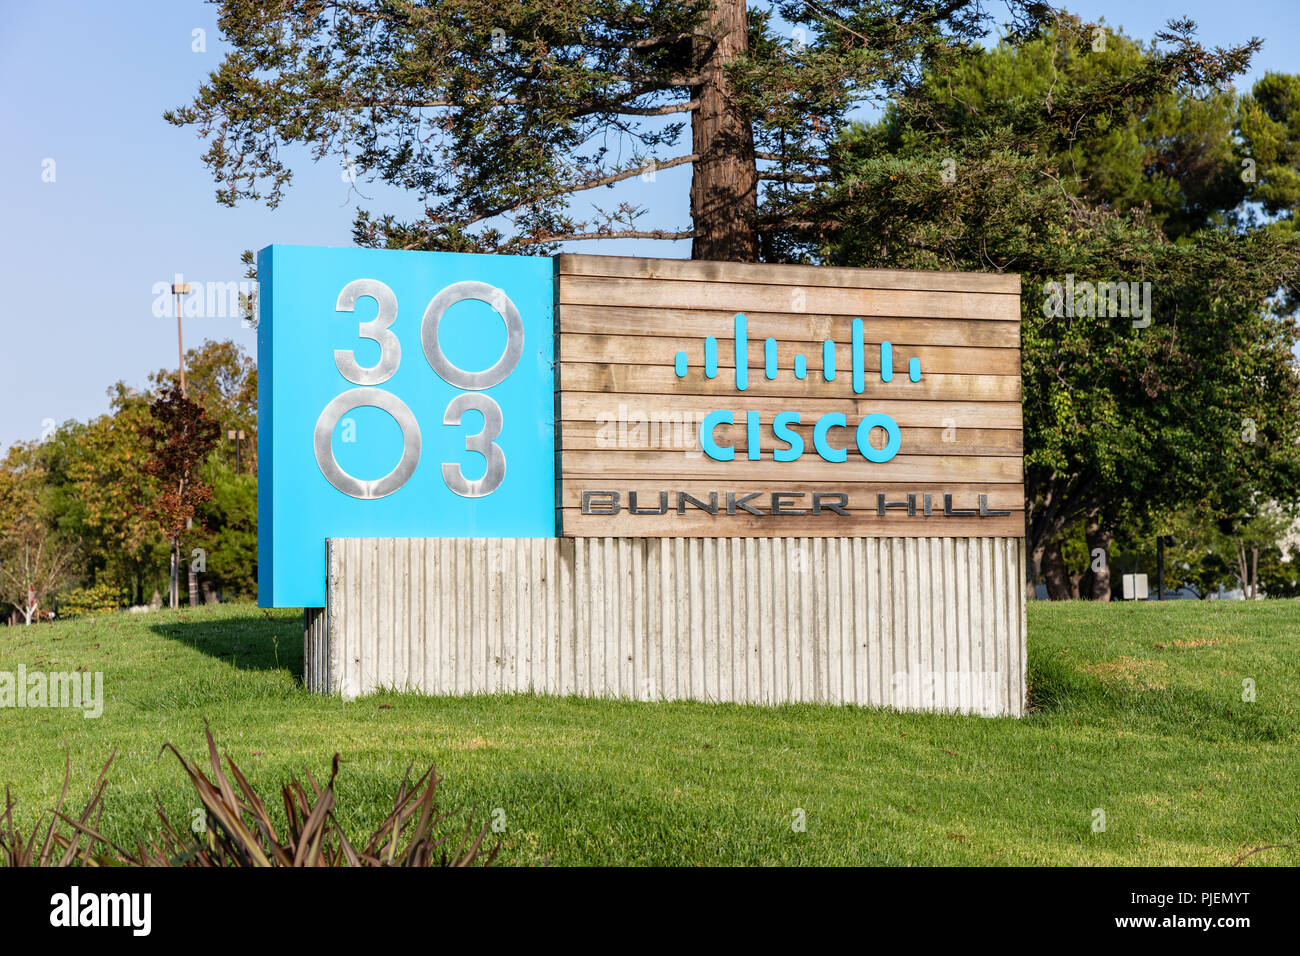 Cisco, 3003 Bunker Hill, sign; Santa Clara, California Stock Photo